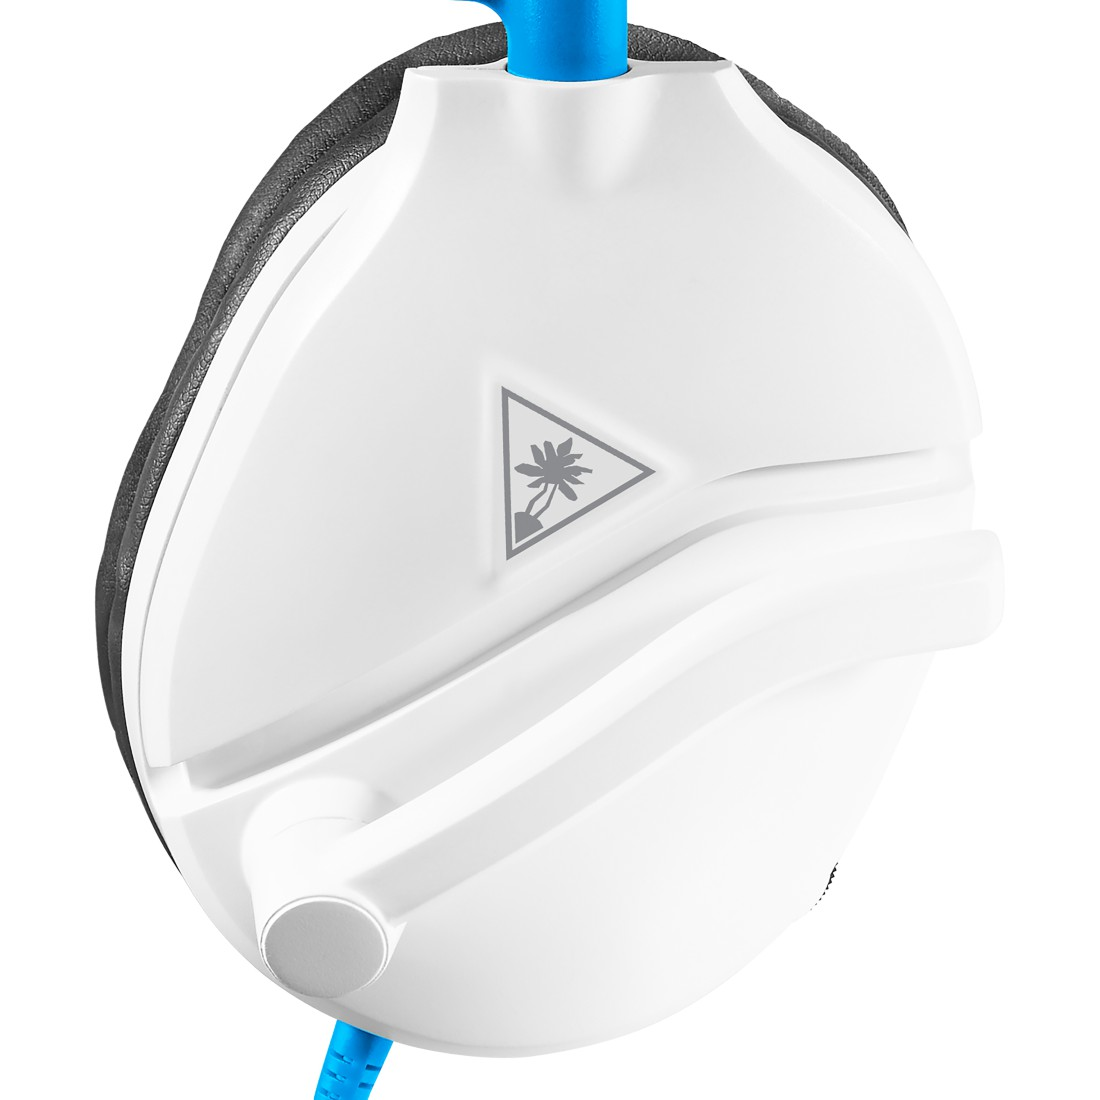 Headset TURTLE Over-ear BEACH Weiß/Blau 70, Gaming Recon